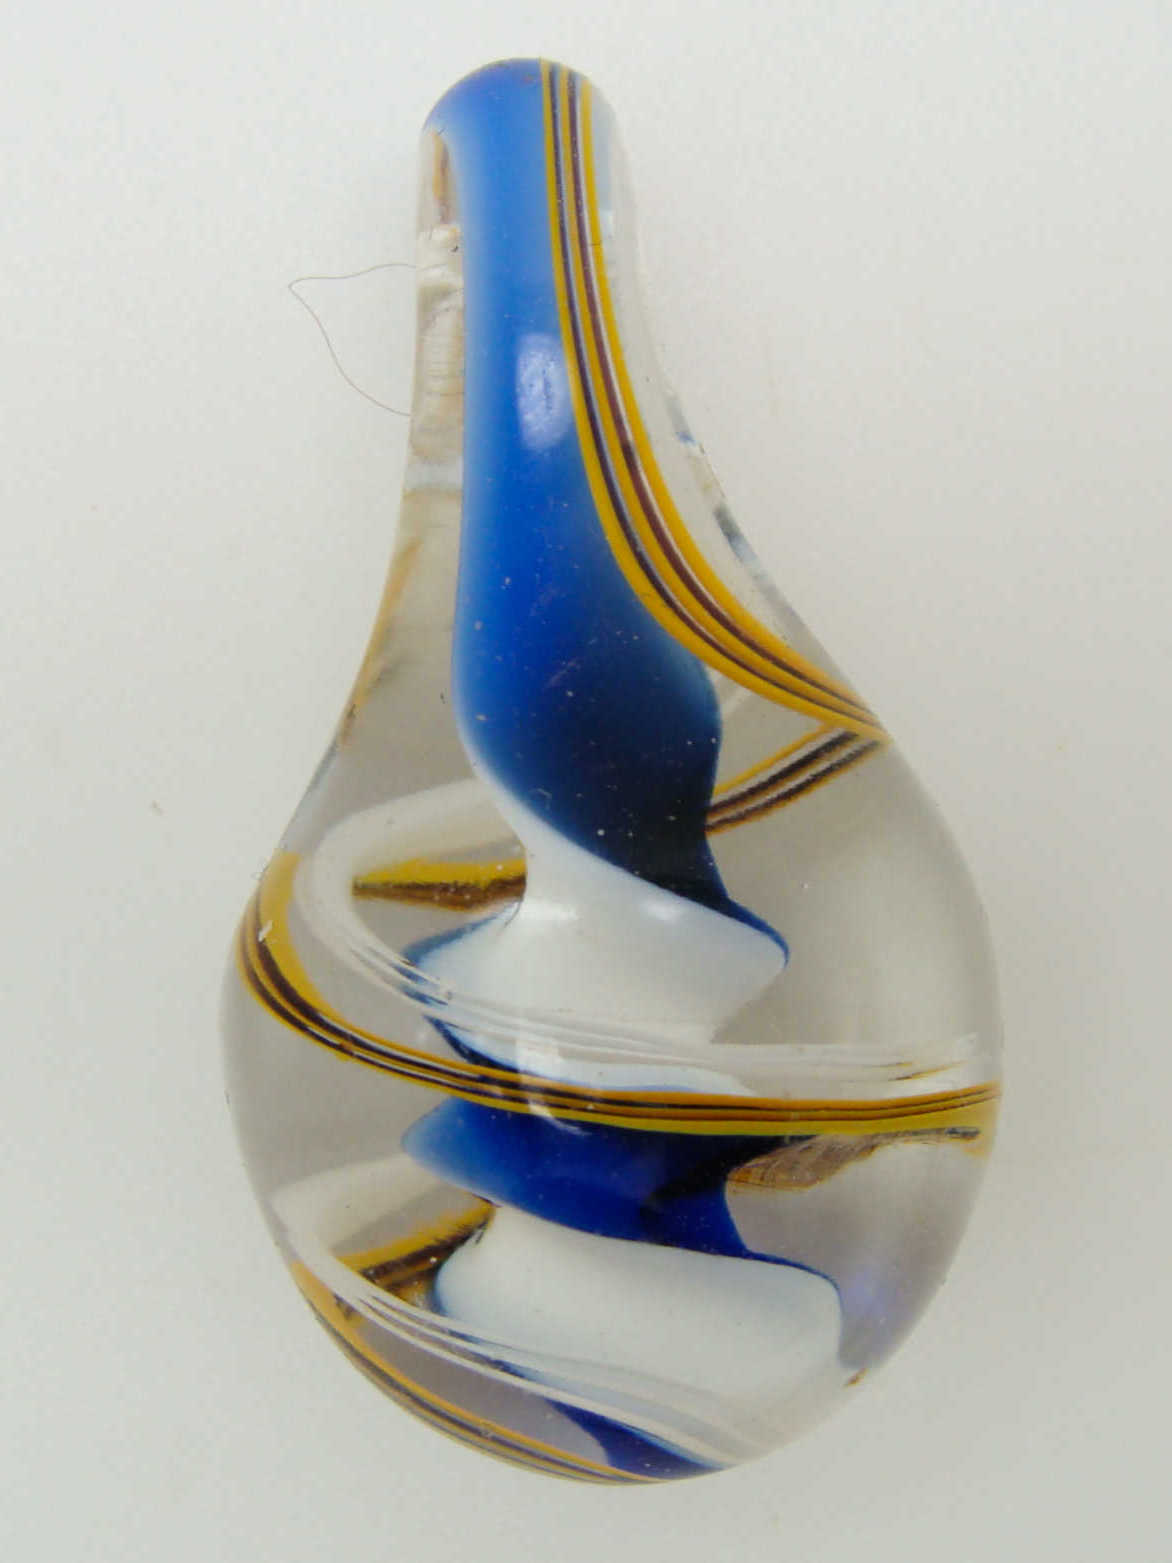 Pend-354-2  pendentif goute bleu blanc verre lampwork